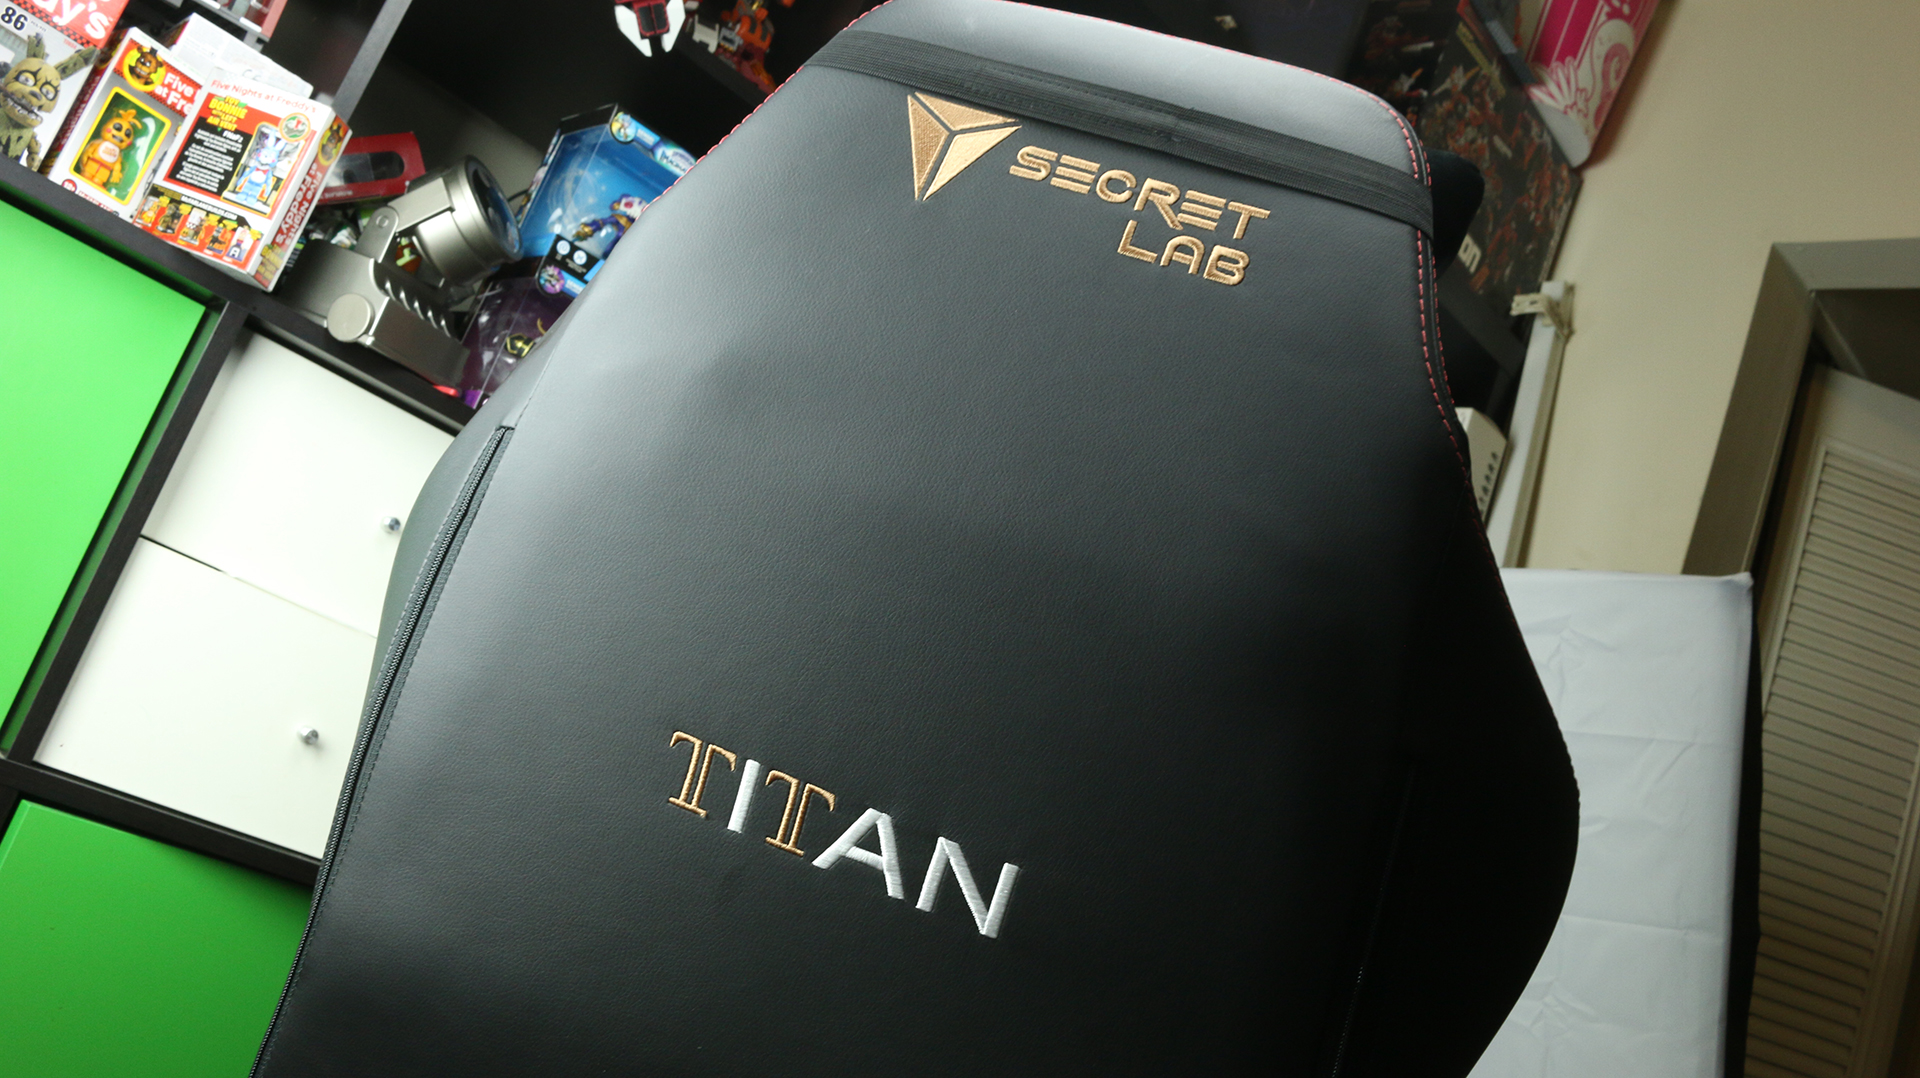 SecretLab Titan Review: A Big Gaming Chair For Big Gaming People